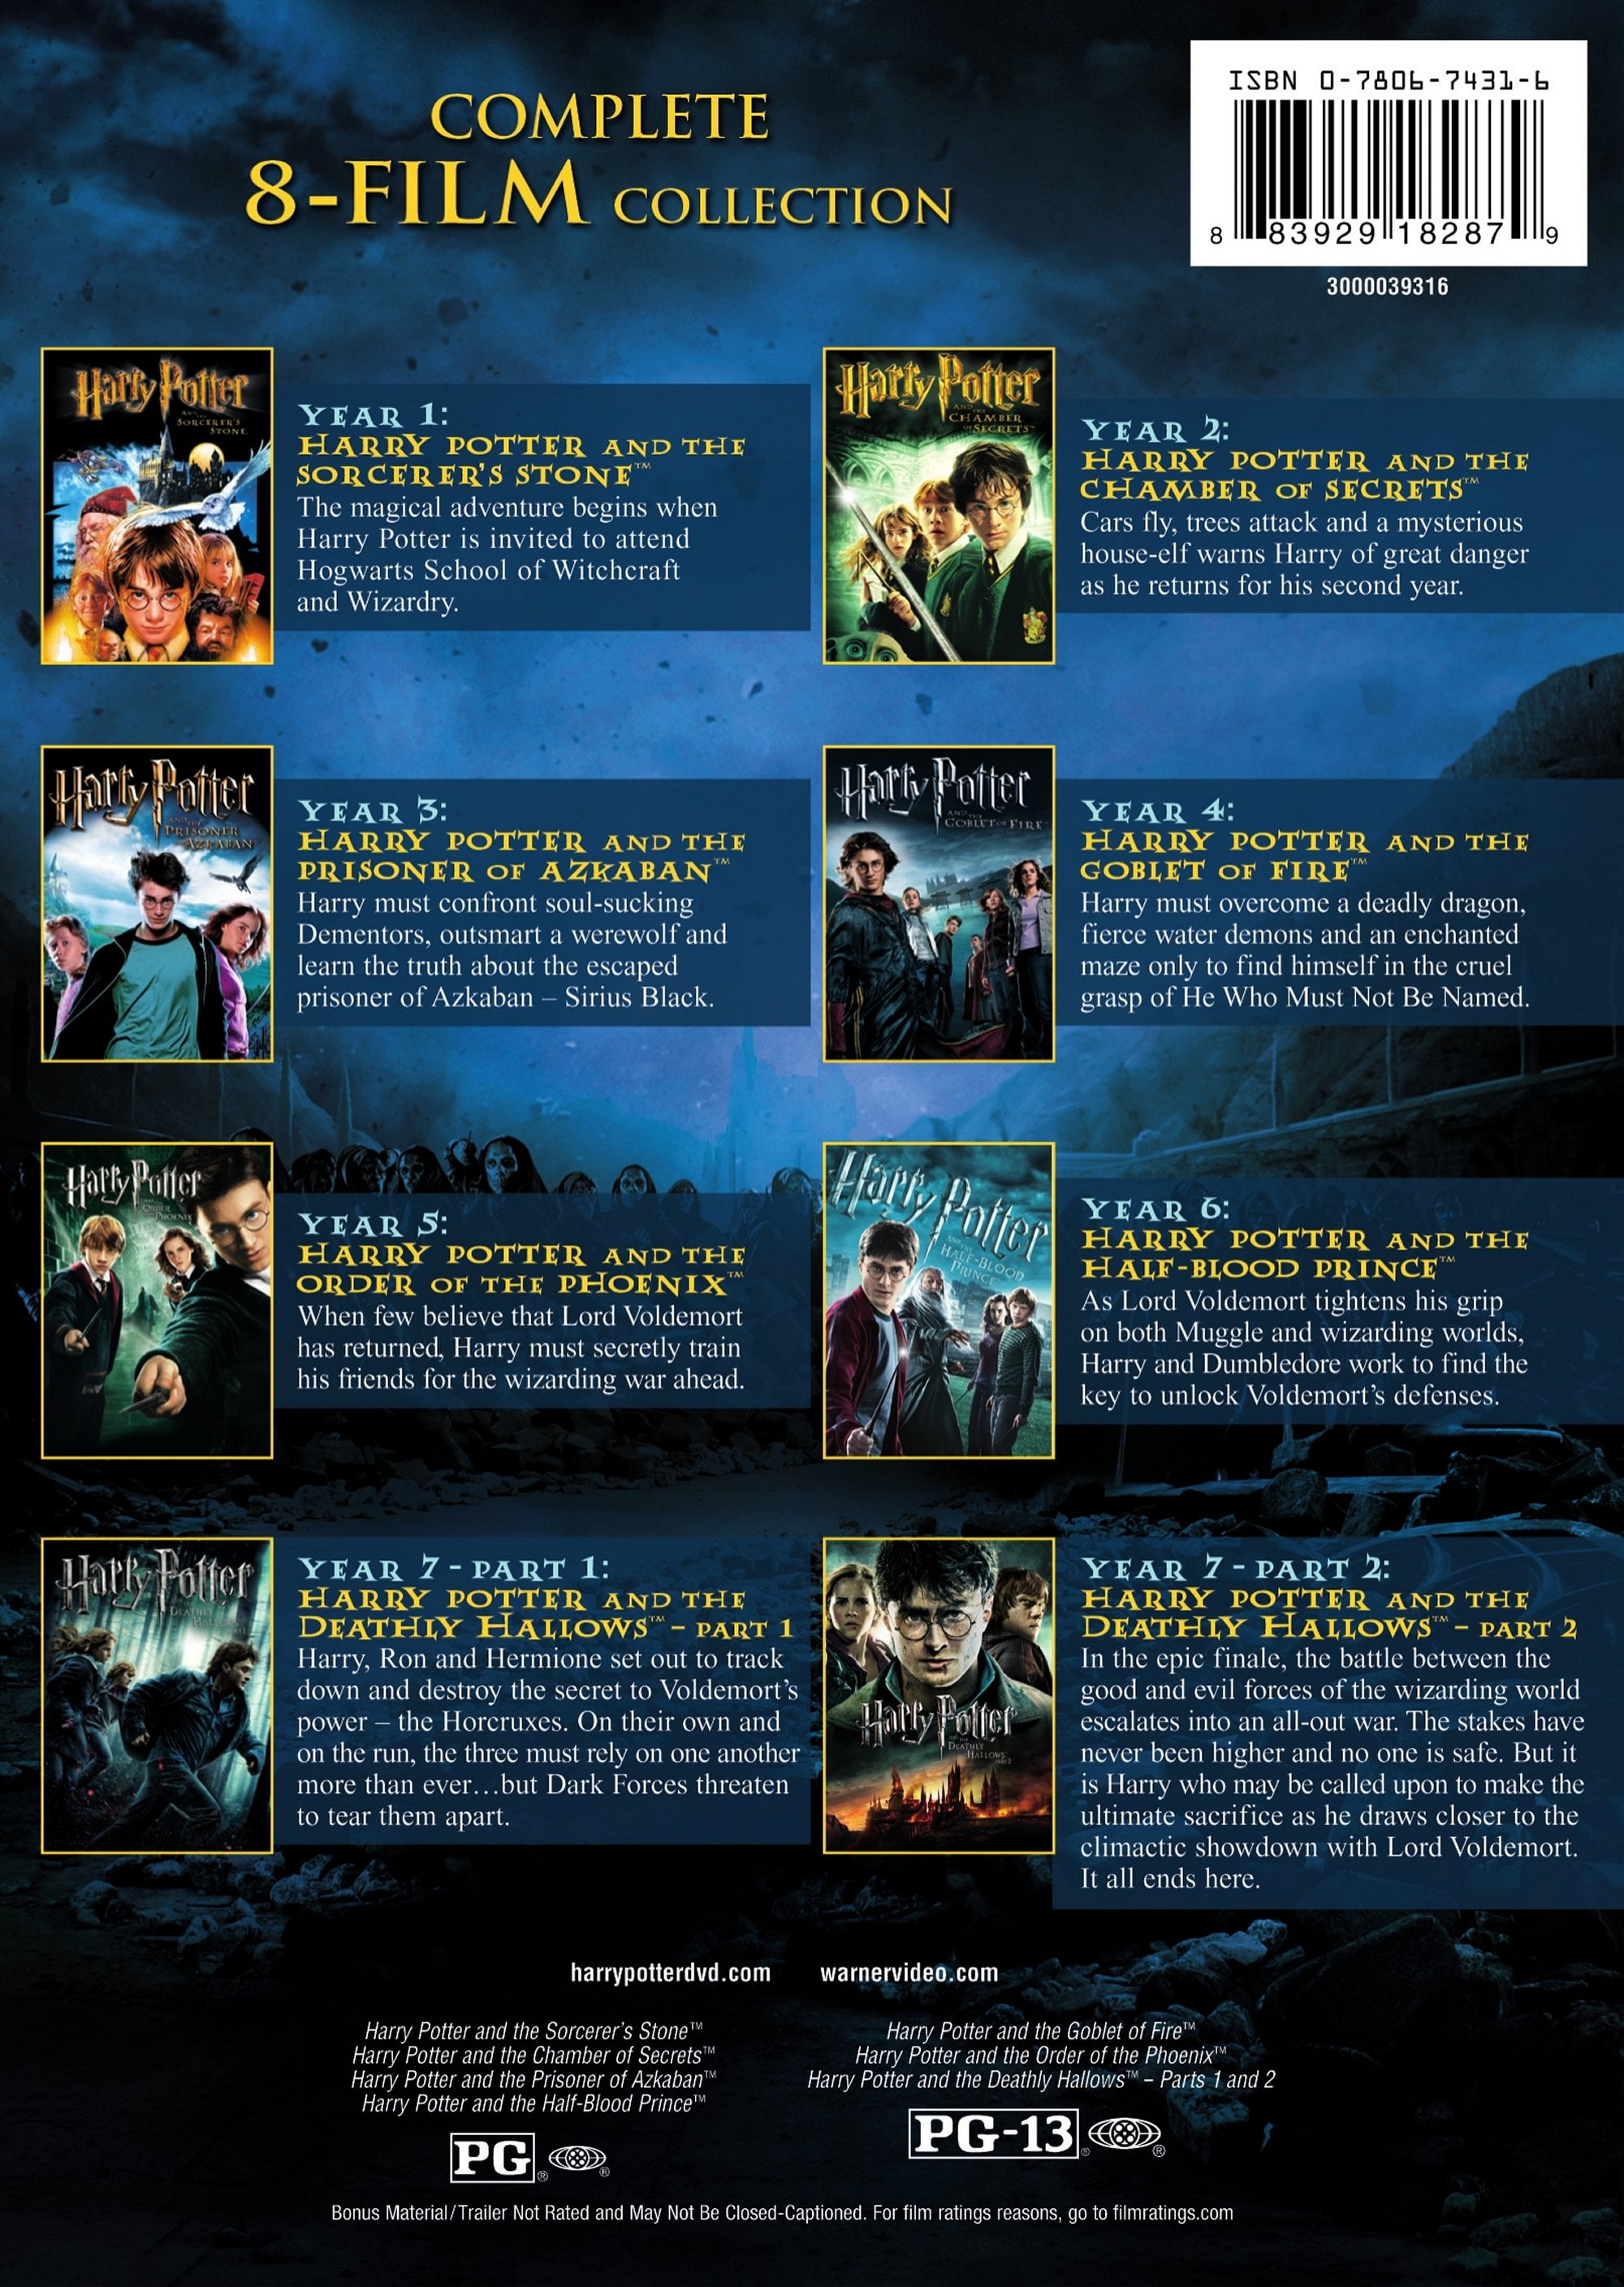 Complete 8-Film Collection DVD 8-Disc Set US 2011 Harry Potter 